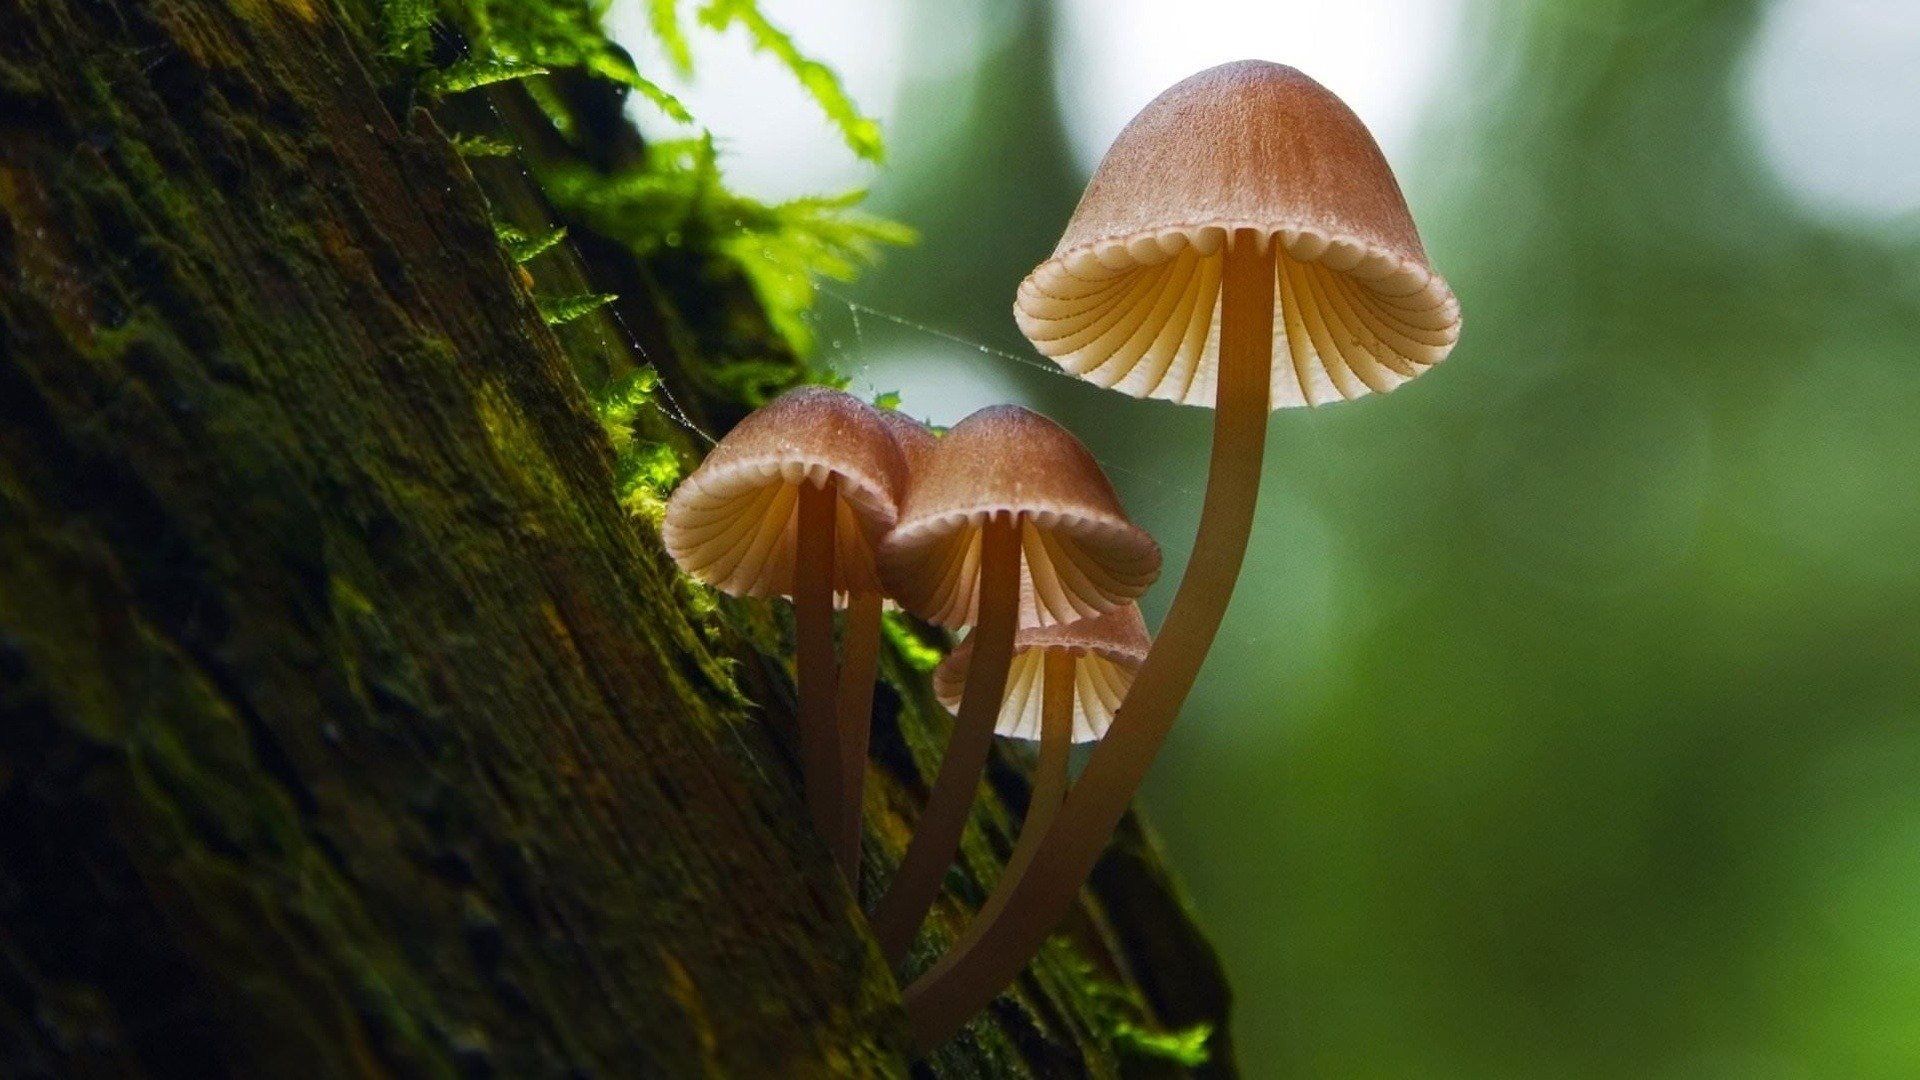 Fantastic Fungi Backdrop